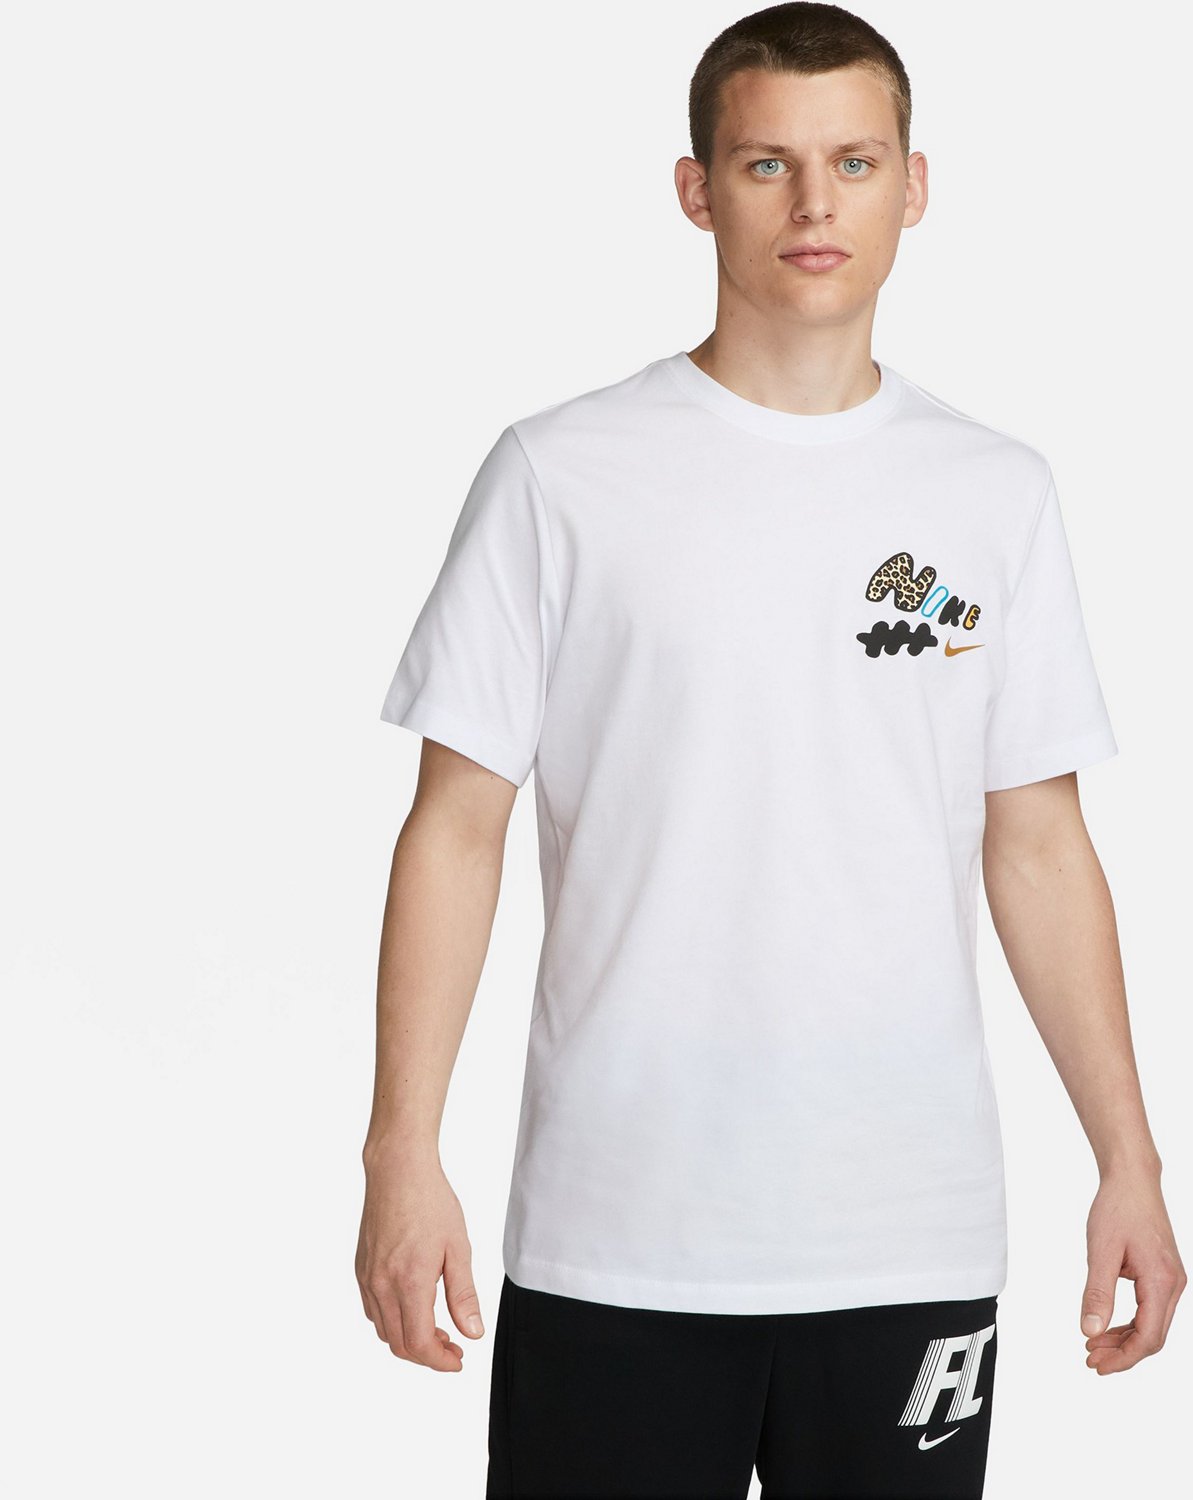 Nike Men's Football Swoosh T-shirt | Free Shipping at Academy